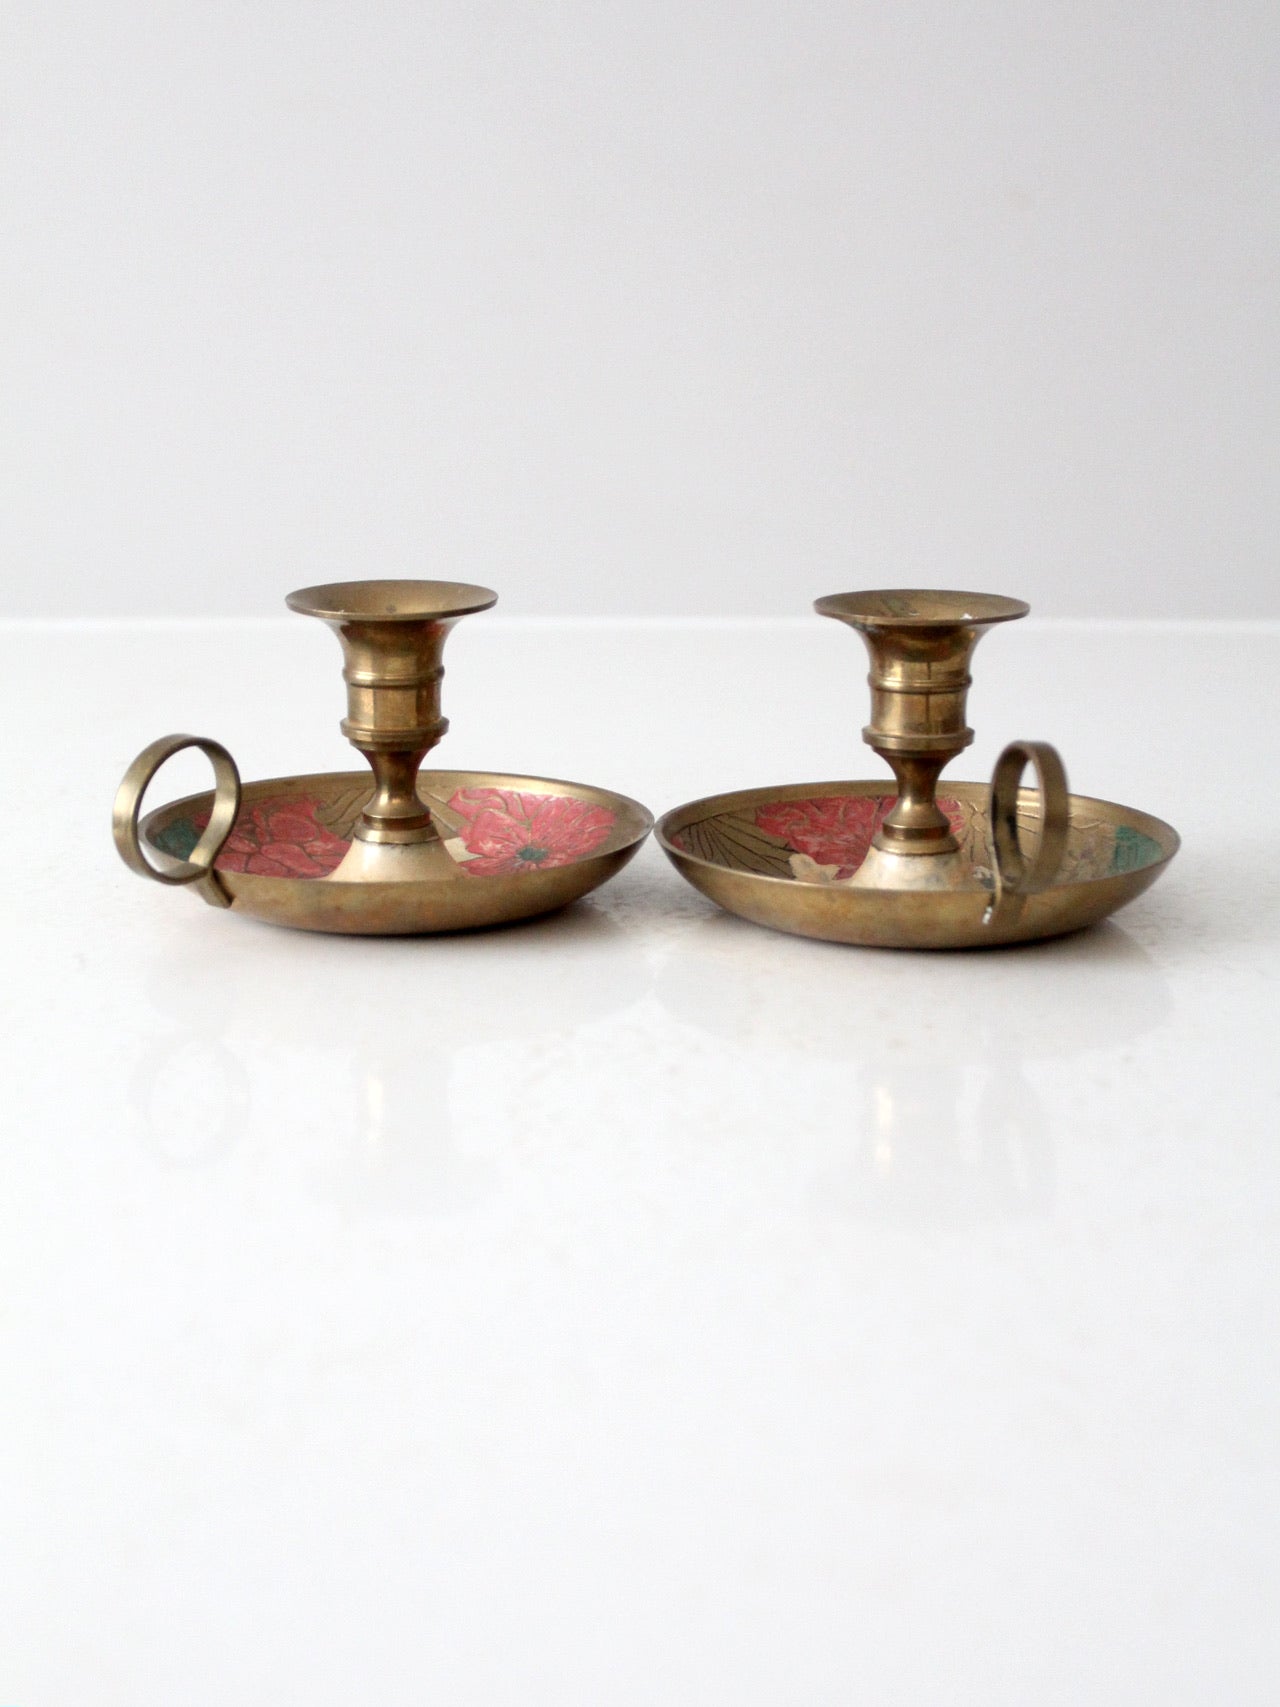 vintage enamel brass candlestick holder pair